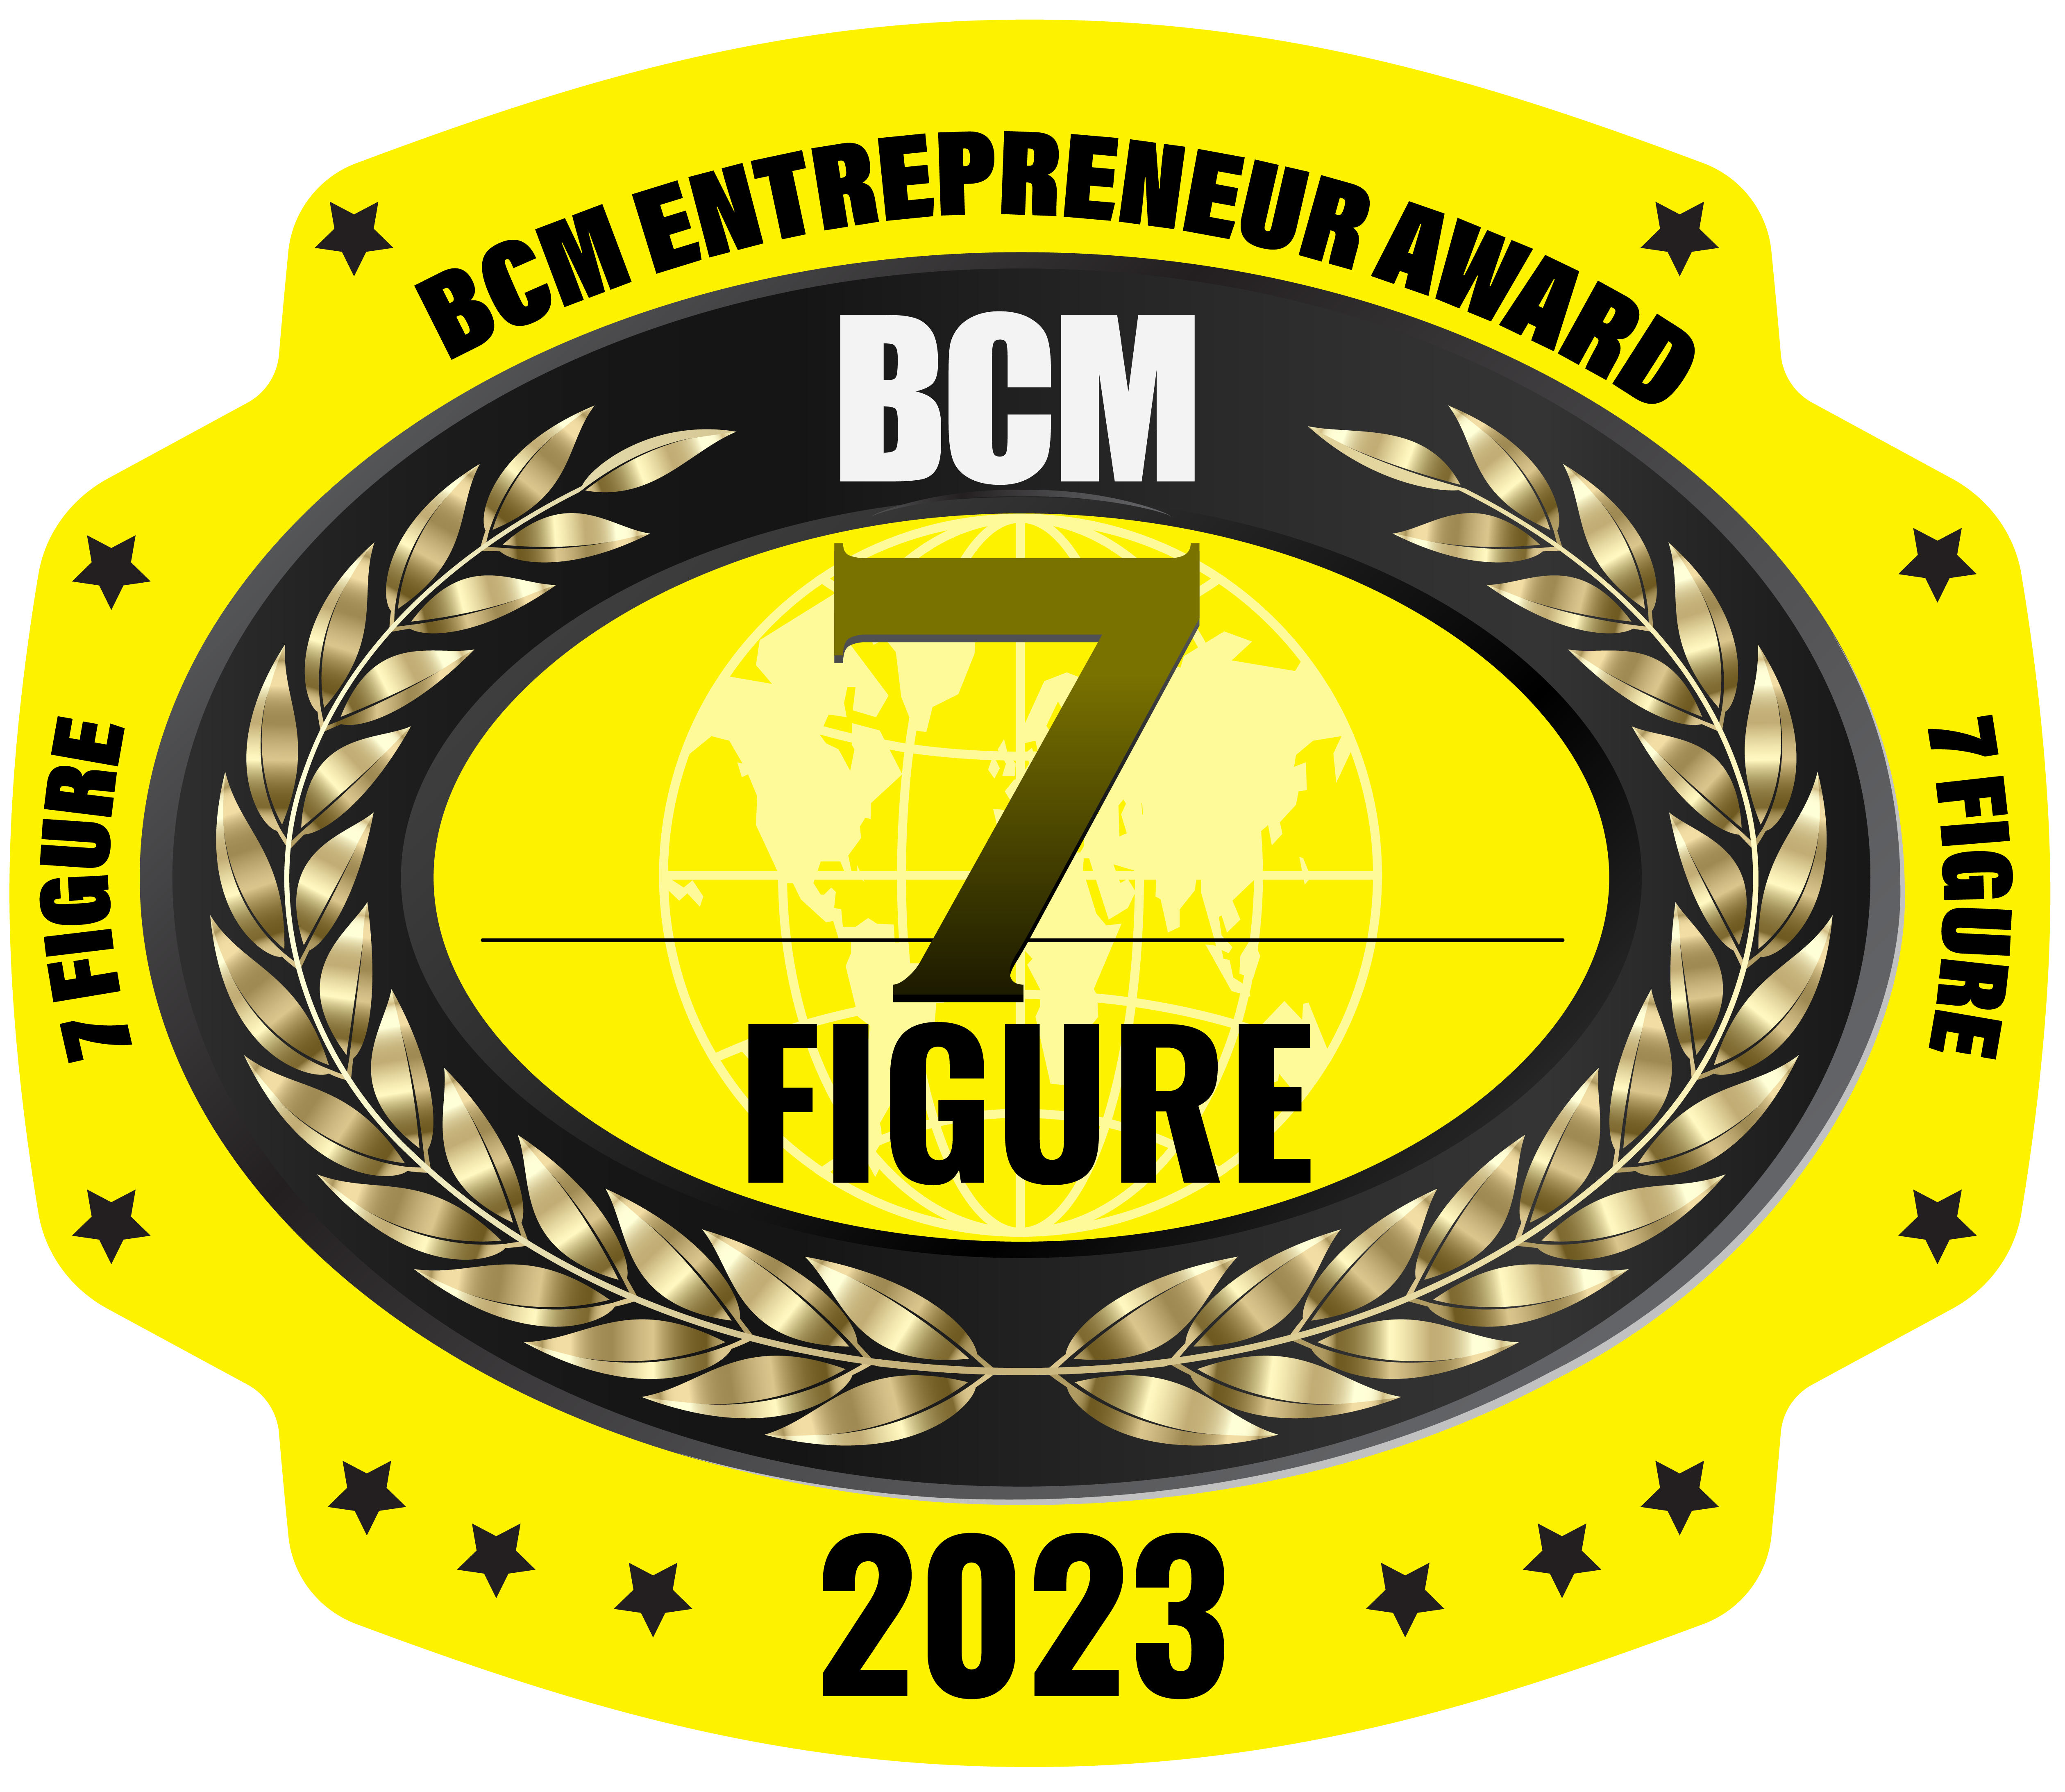 Entrepreneur Award 7 Figure Logo